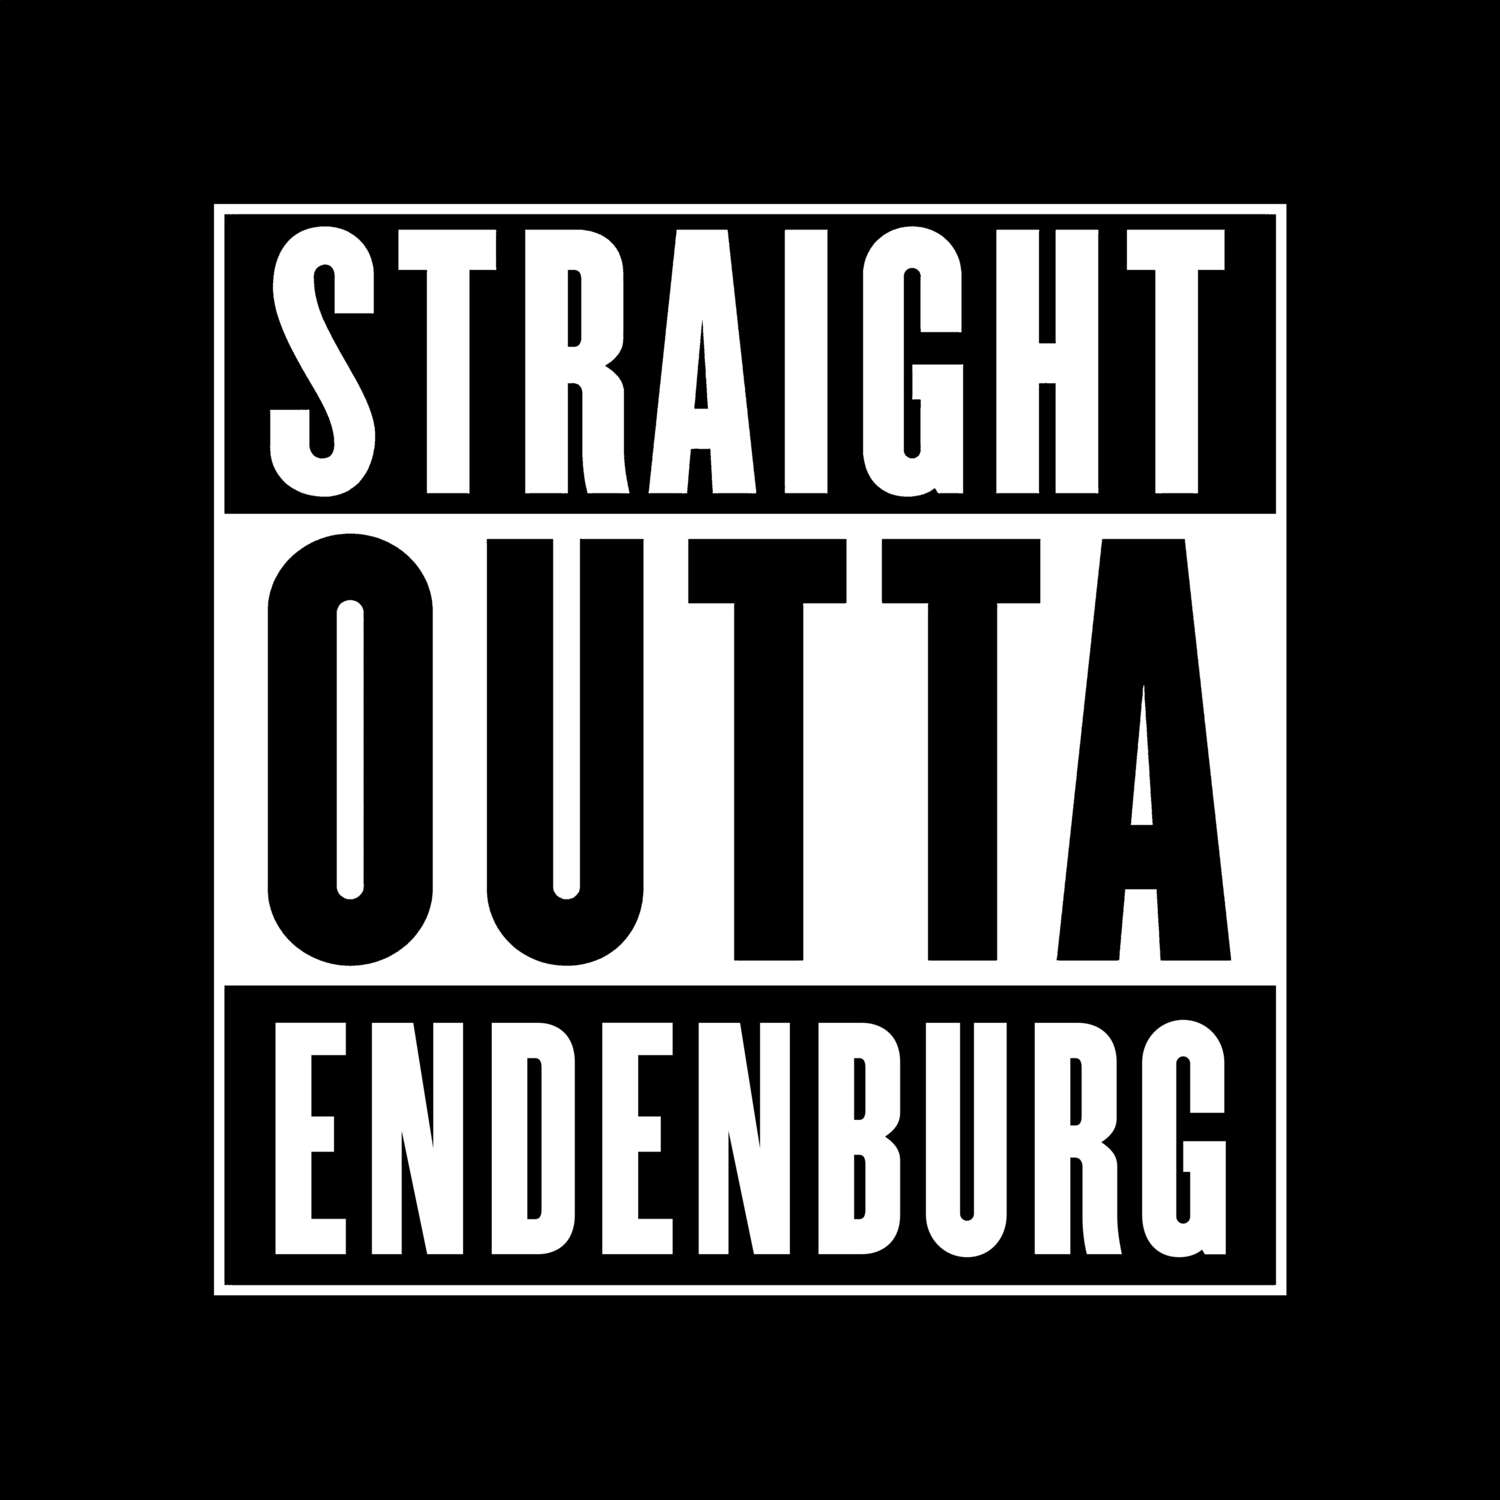 Endenburg T-Shirt »Straight Outta«